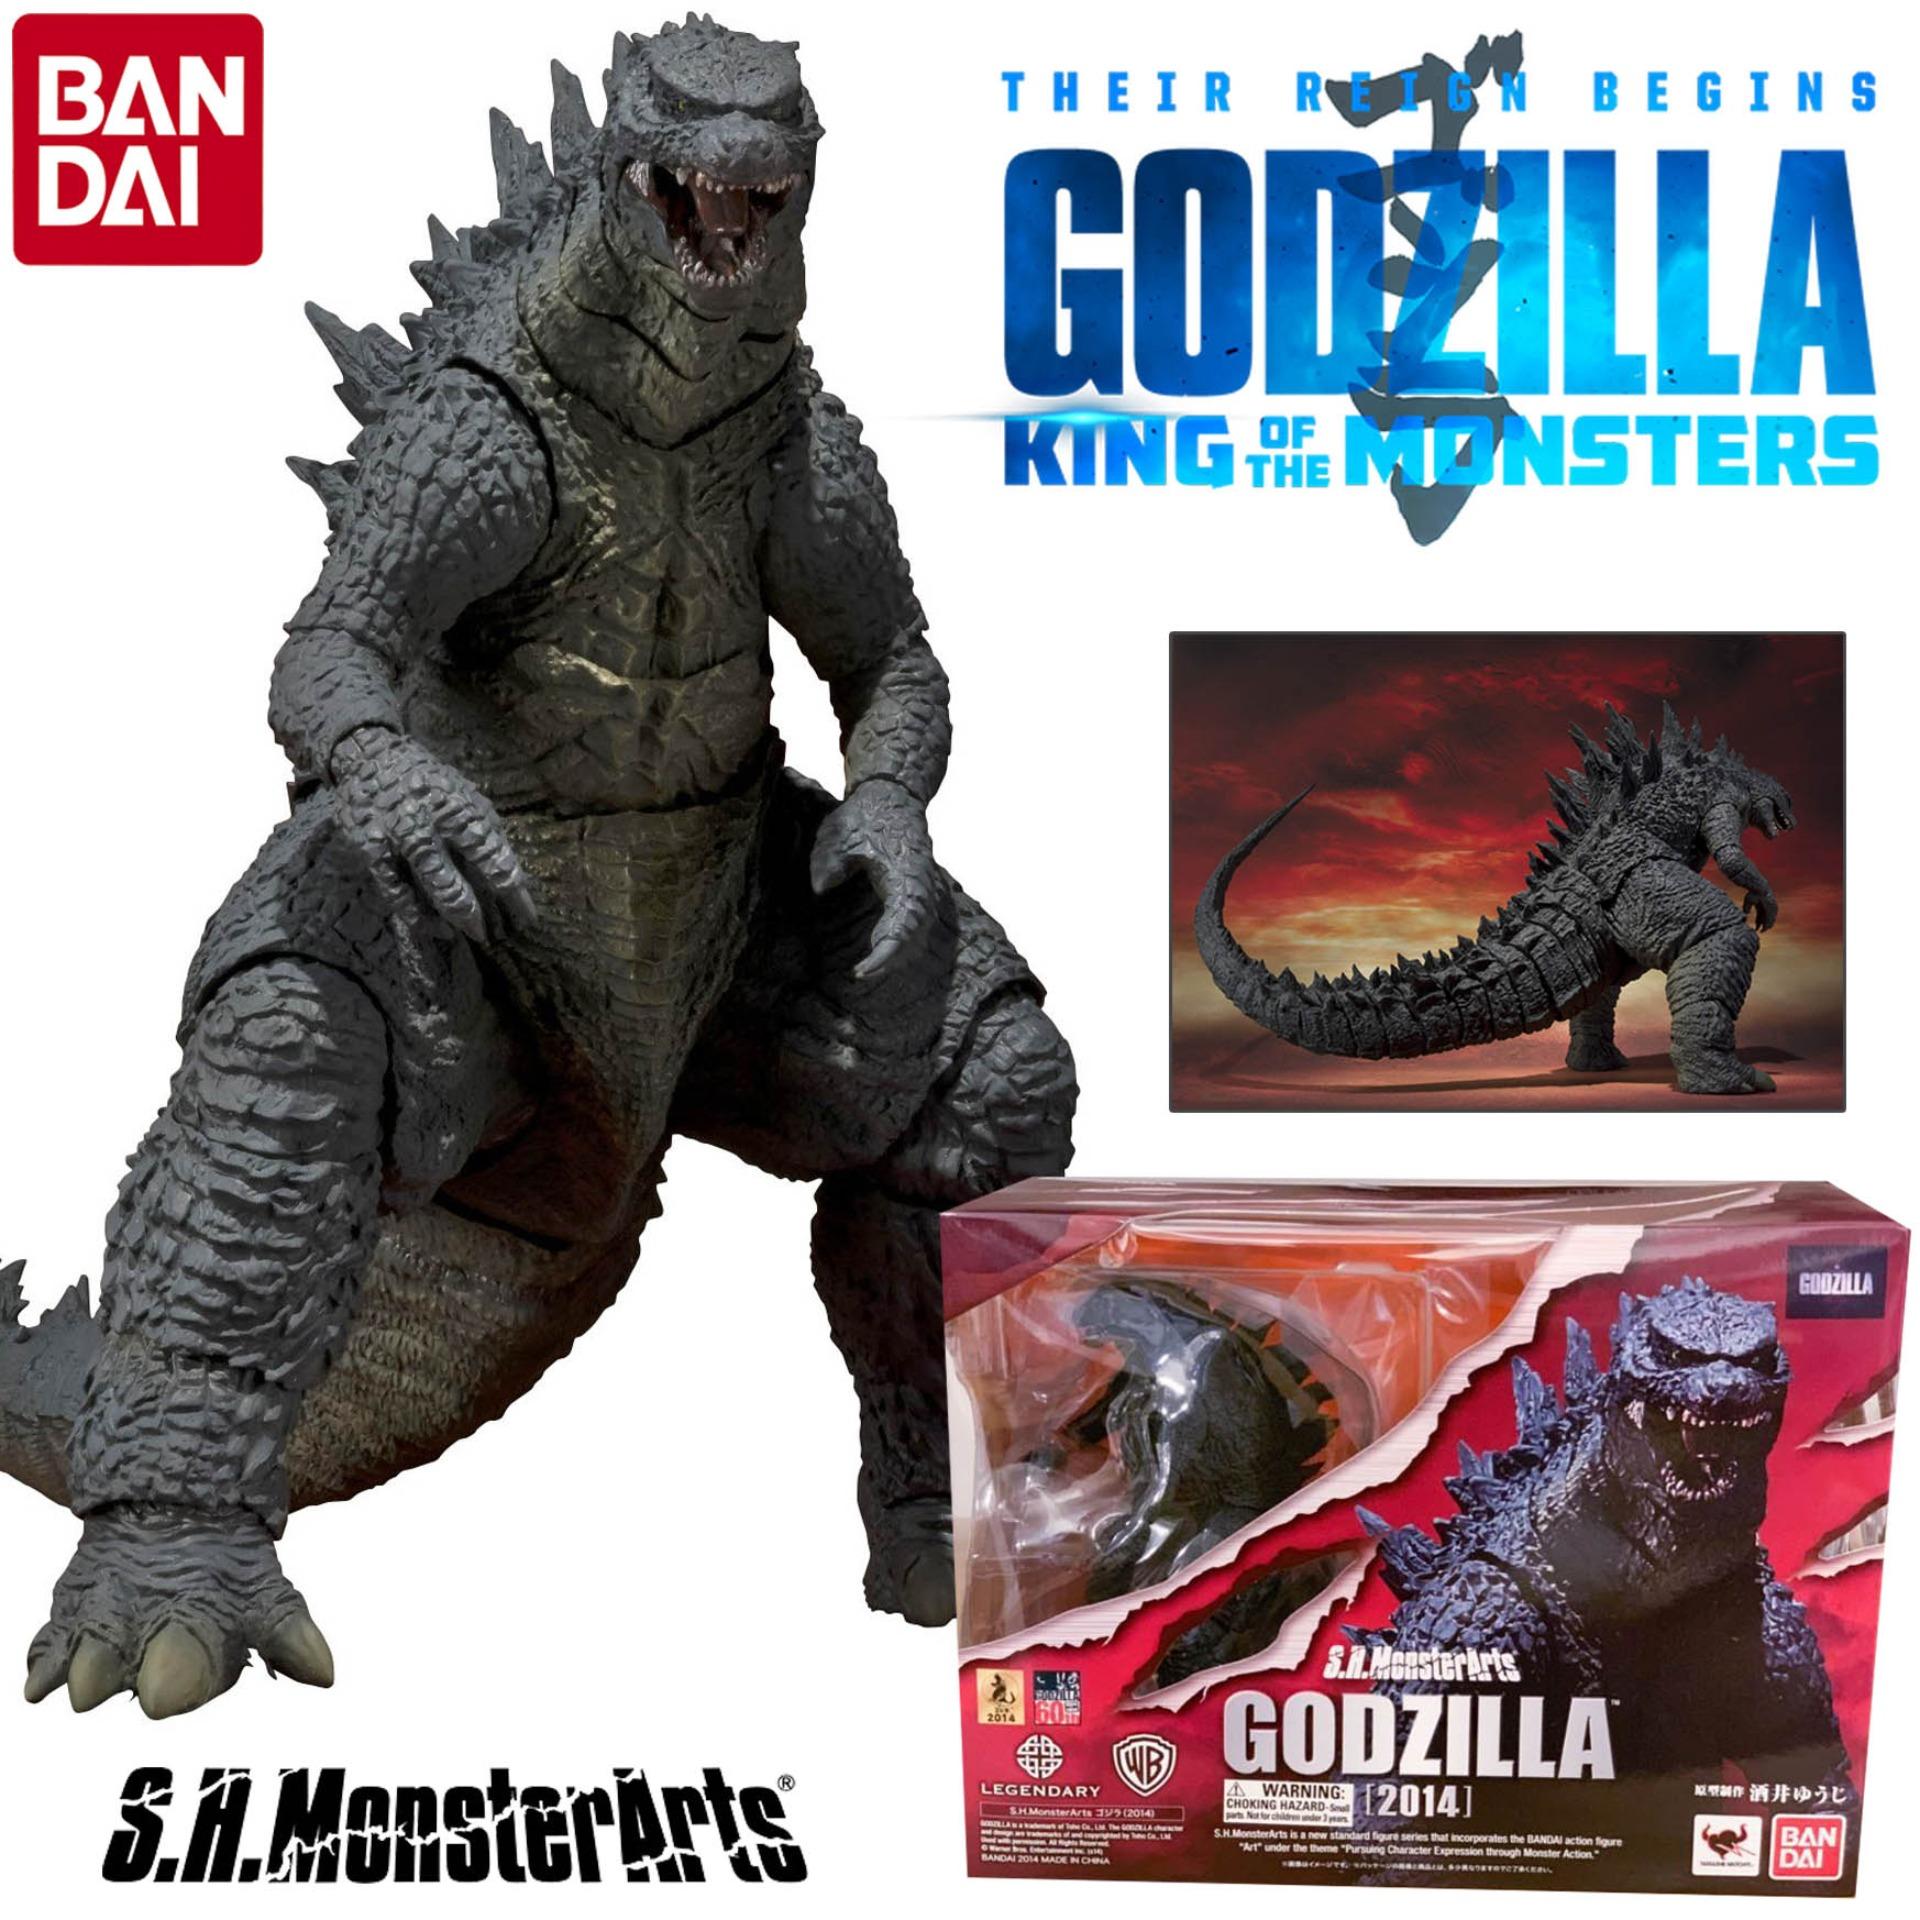 Model โมเดล งานแท้ 100NDAI Tamashii Nations S.H.MonsterArts Godzilla 2014 King of the Monsters ก็อดซิลล่า ราชันแห่งมอนสเตอร์ Ver Figma ฟิกม่า Anime ขยับแขน-ขาได้ อนิเมะ การ์ตูน มังงะ Doll ตุ๊กตา สั่งและนำเข้าจากญี่ปุ่น manga Figure ฟิกเกอร์